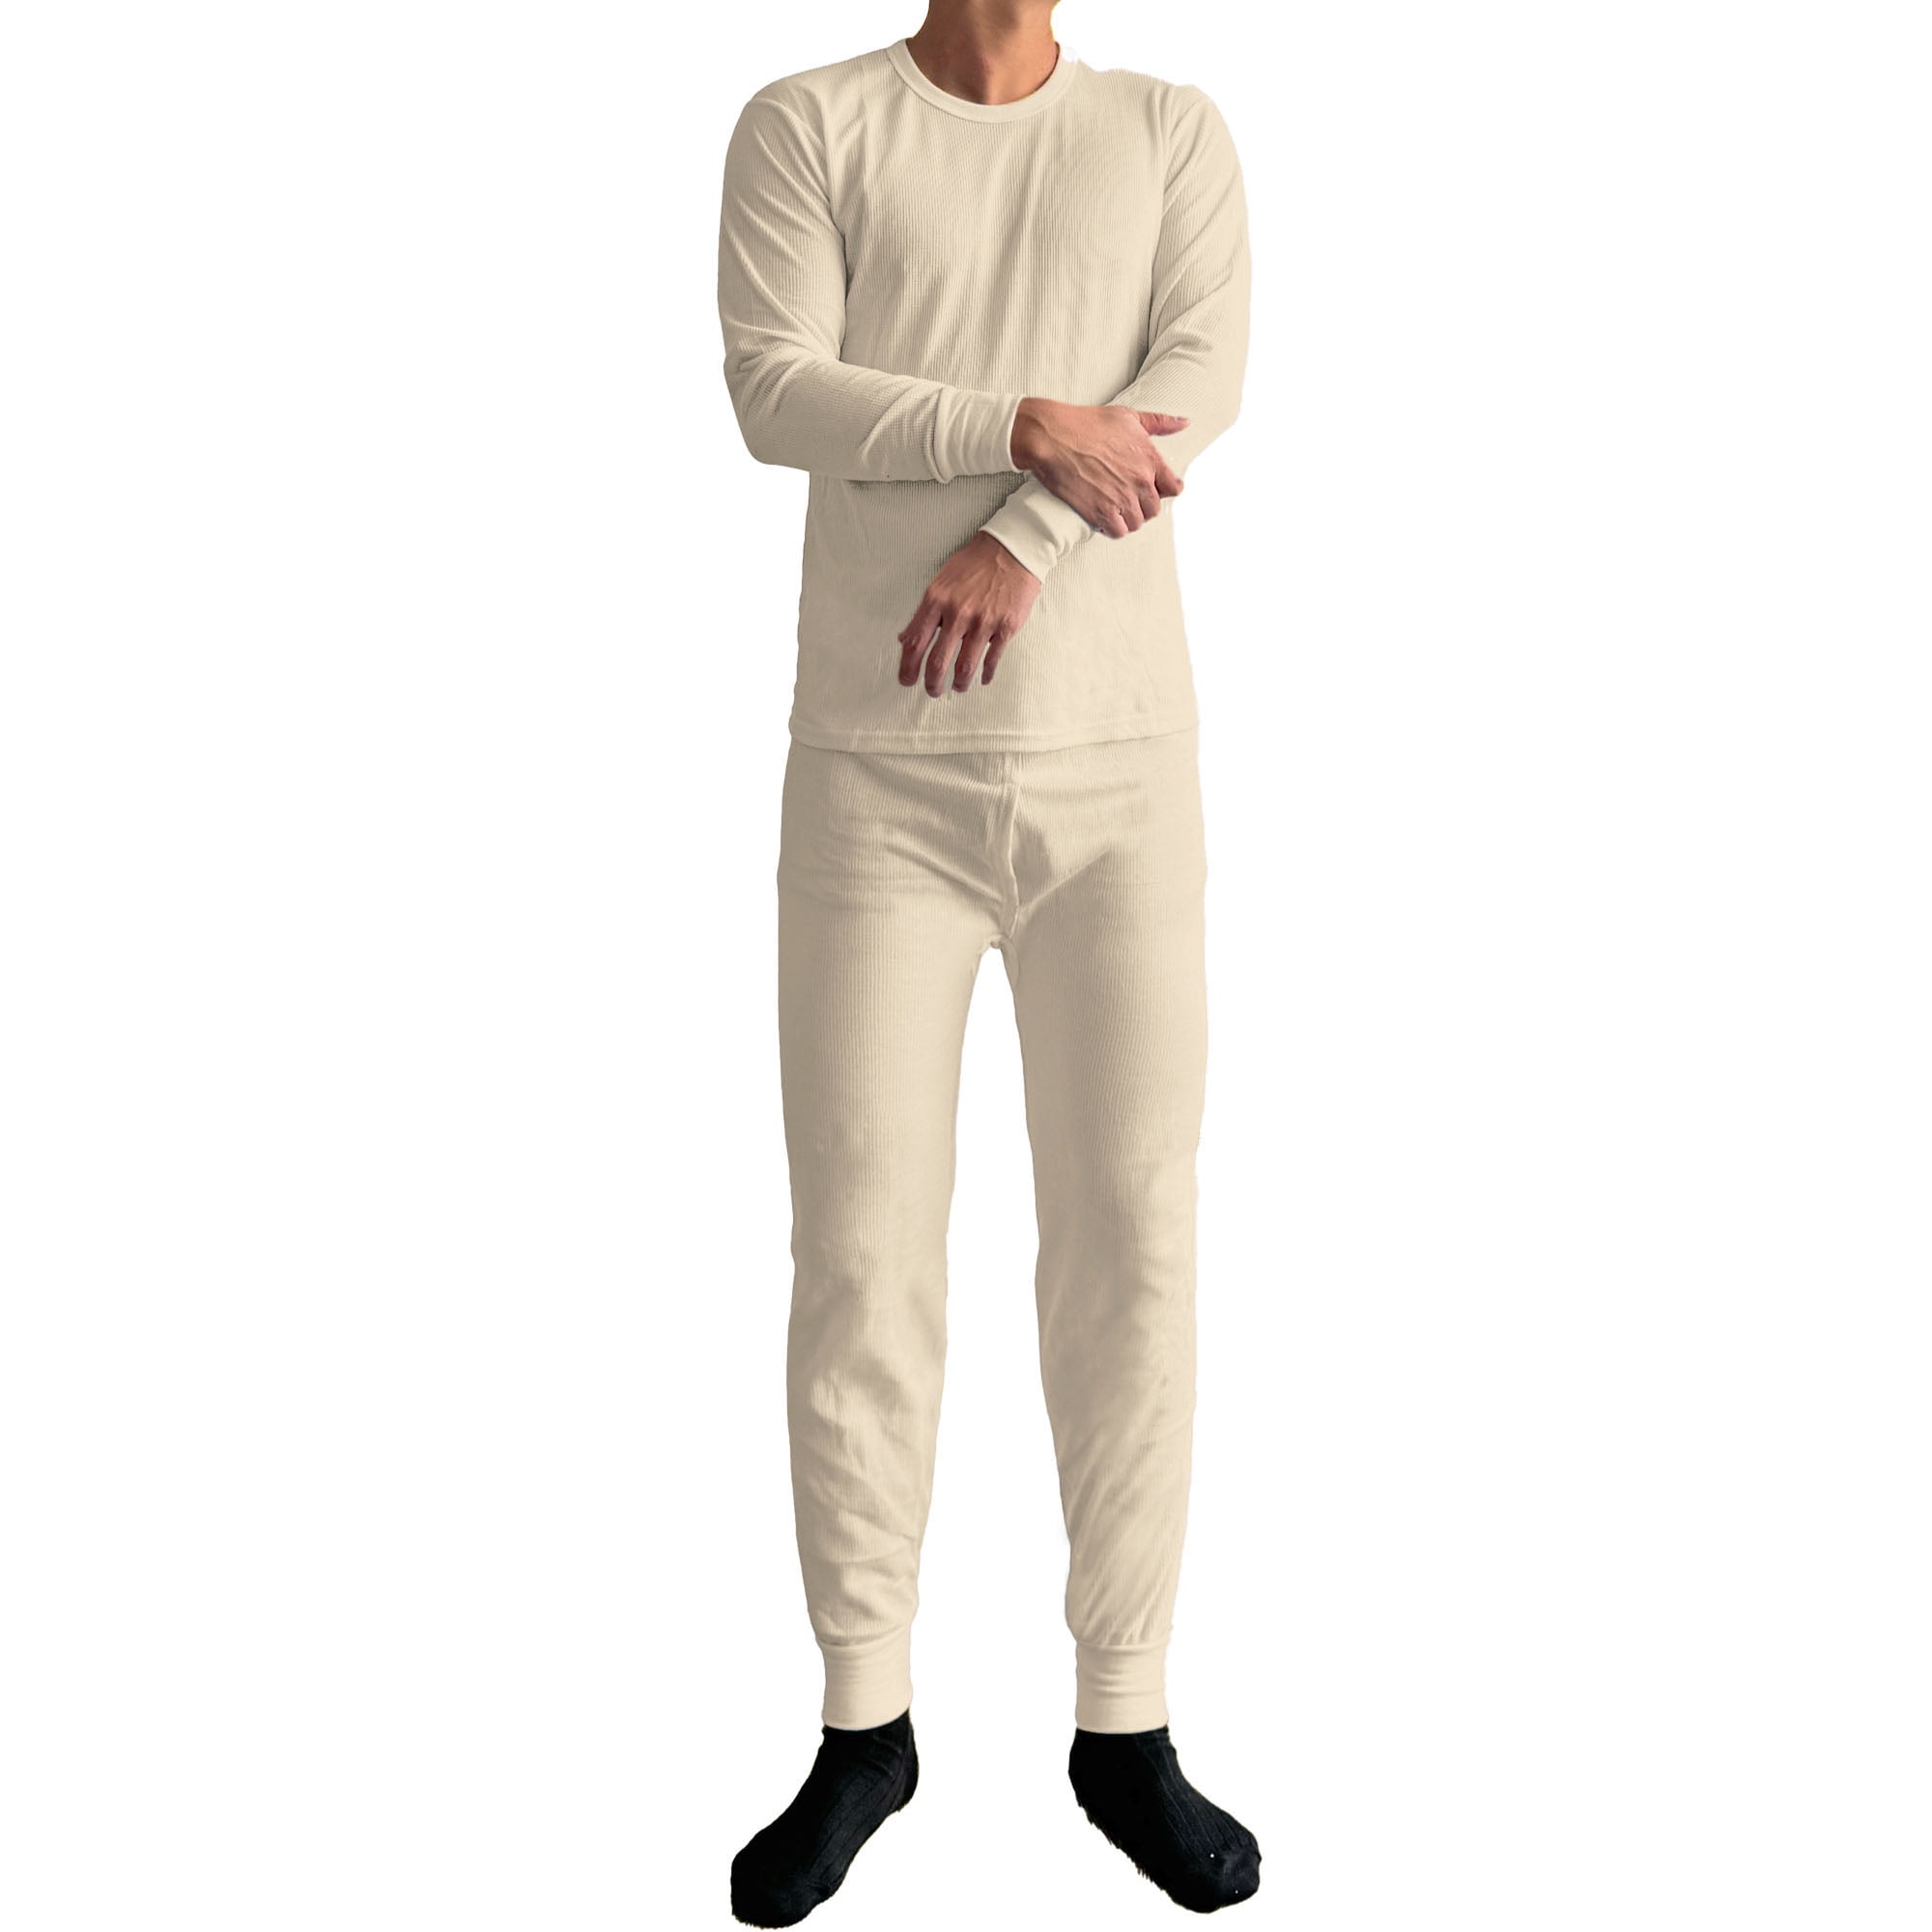 Men's 100% Cotton Long Johns Thermal Underwear Two Pieces Set-XL-Dark Gray